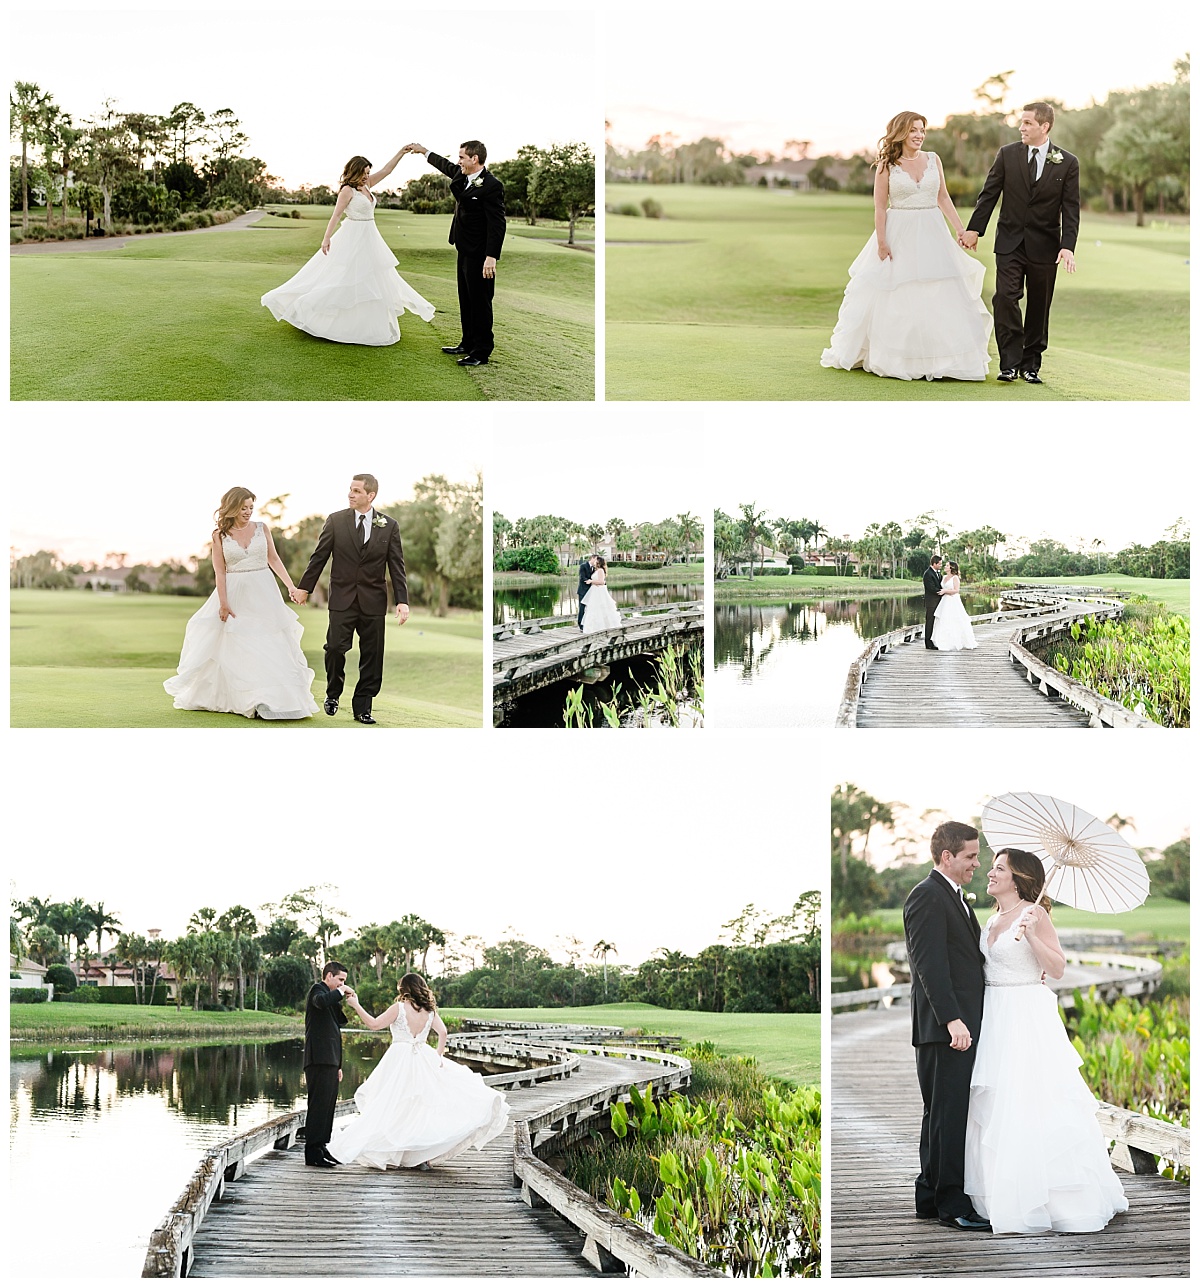 Golf Course wedding pics in west palm beach wedding venue